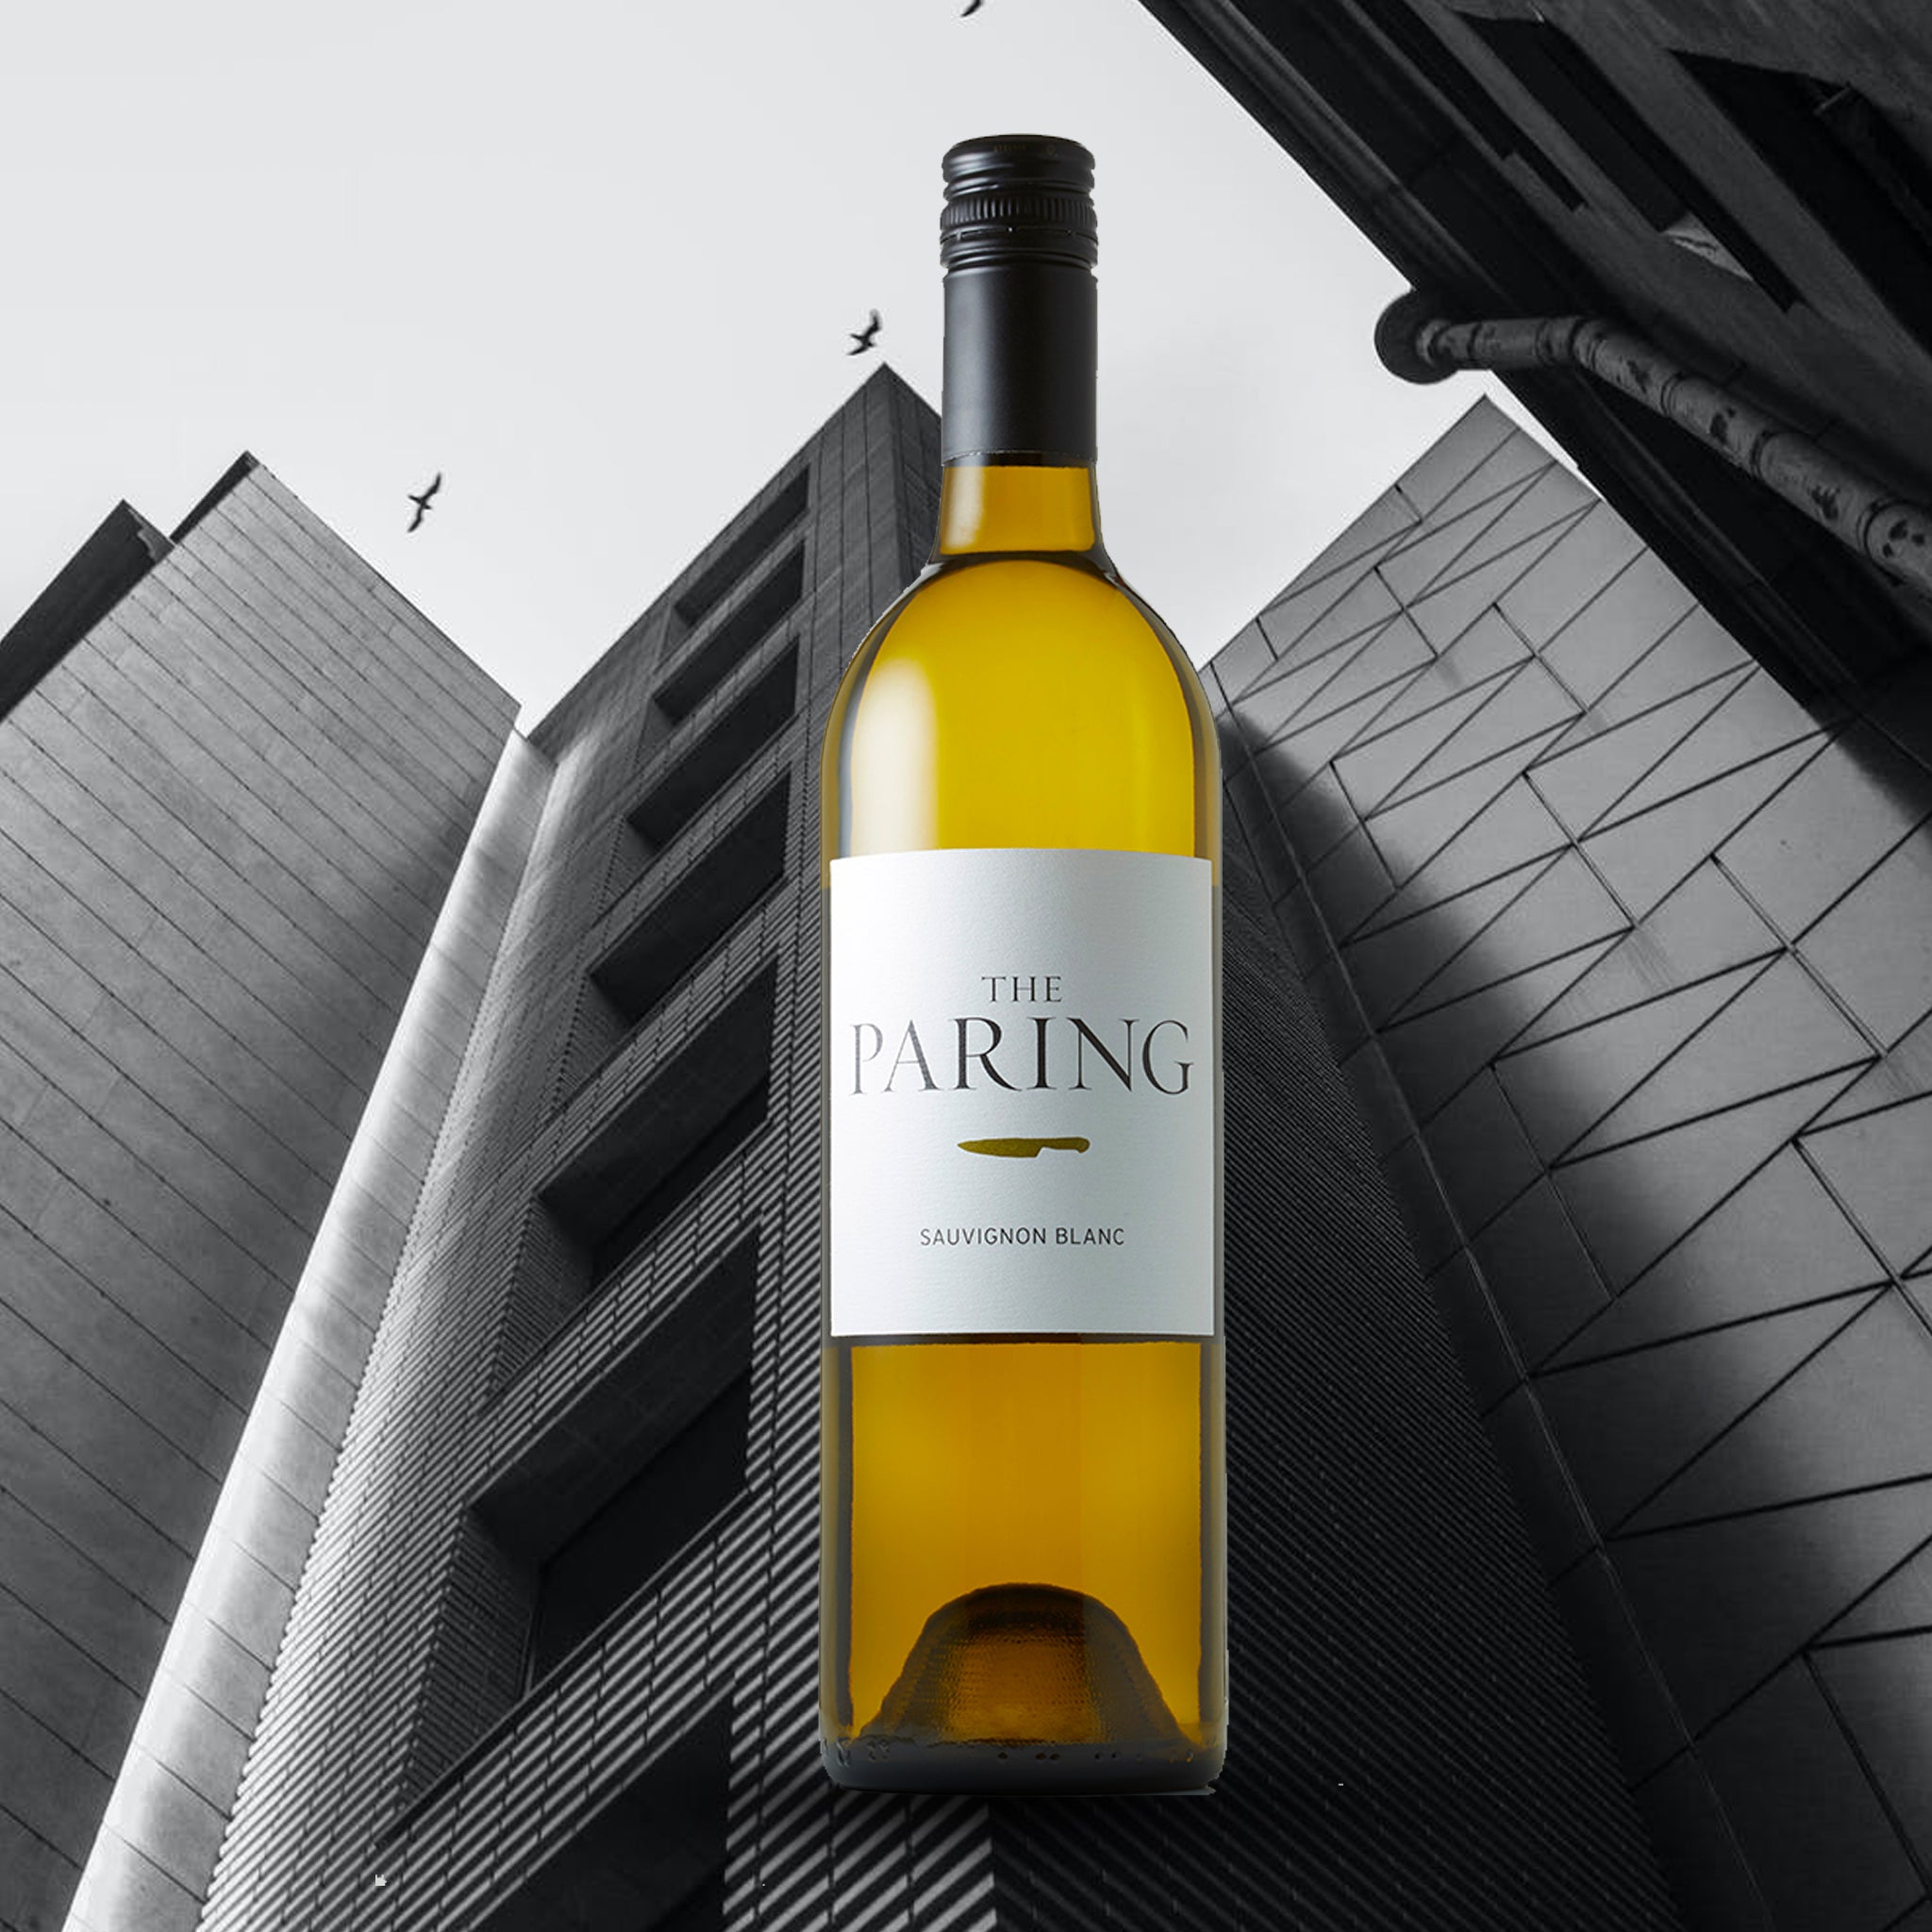 The Paring Sauvignon Blanc 2014